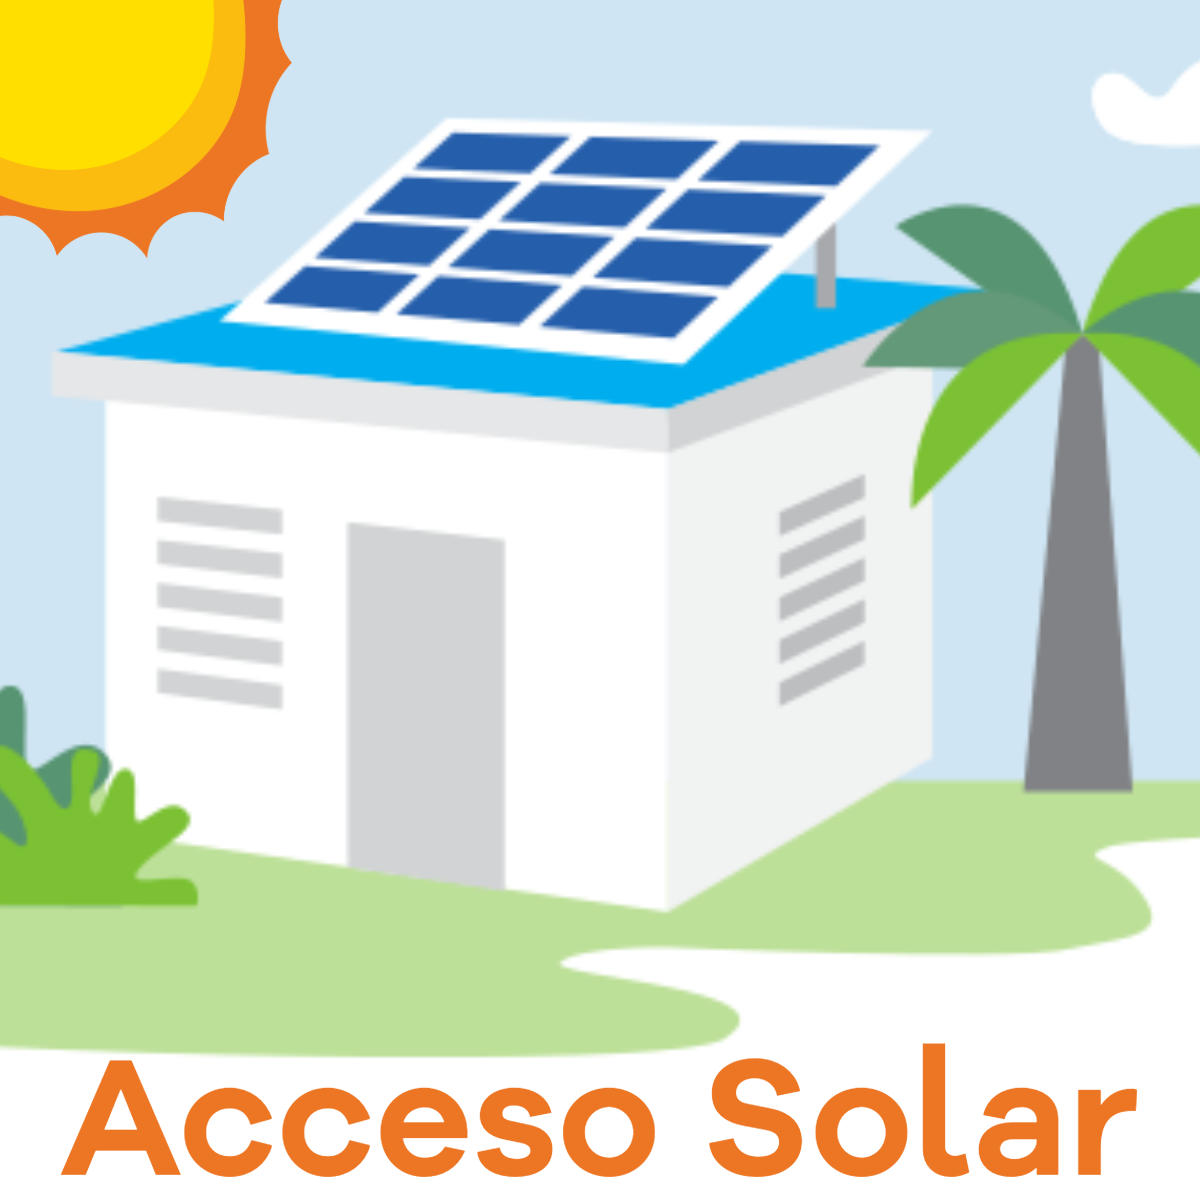 Department of Energy Acceso Solar program